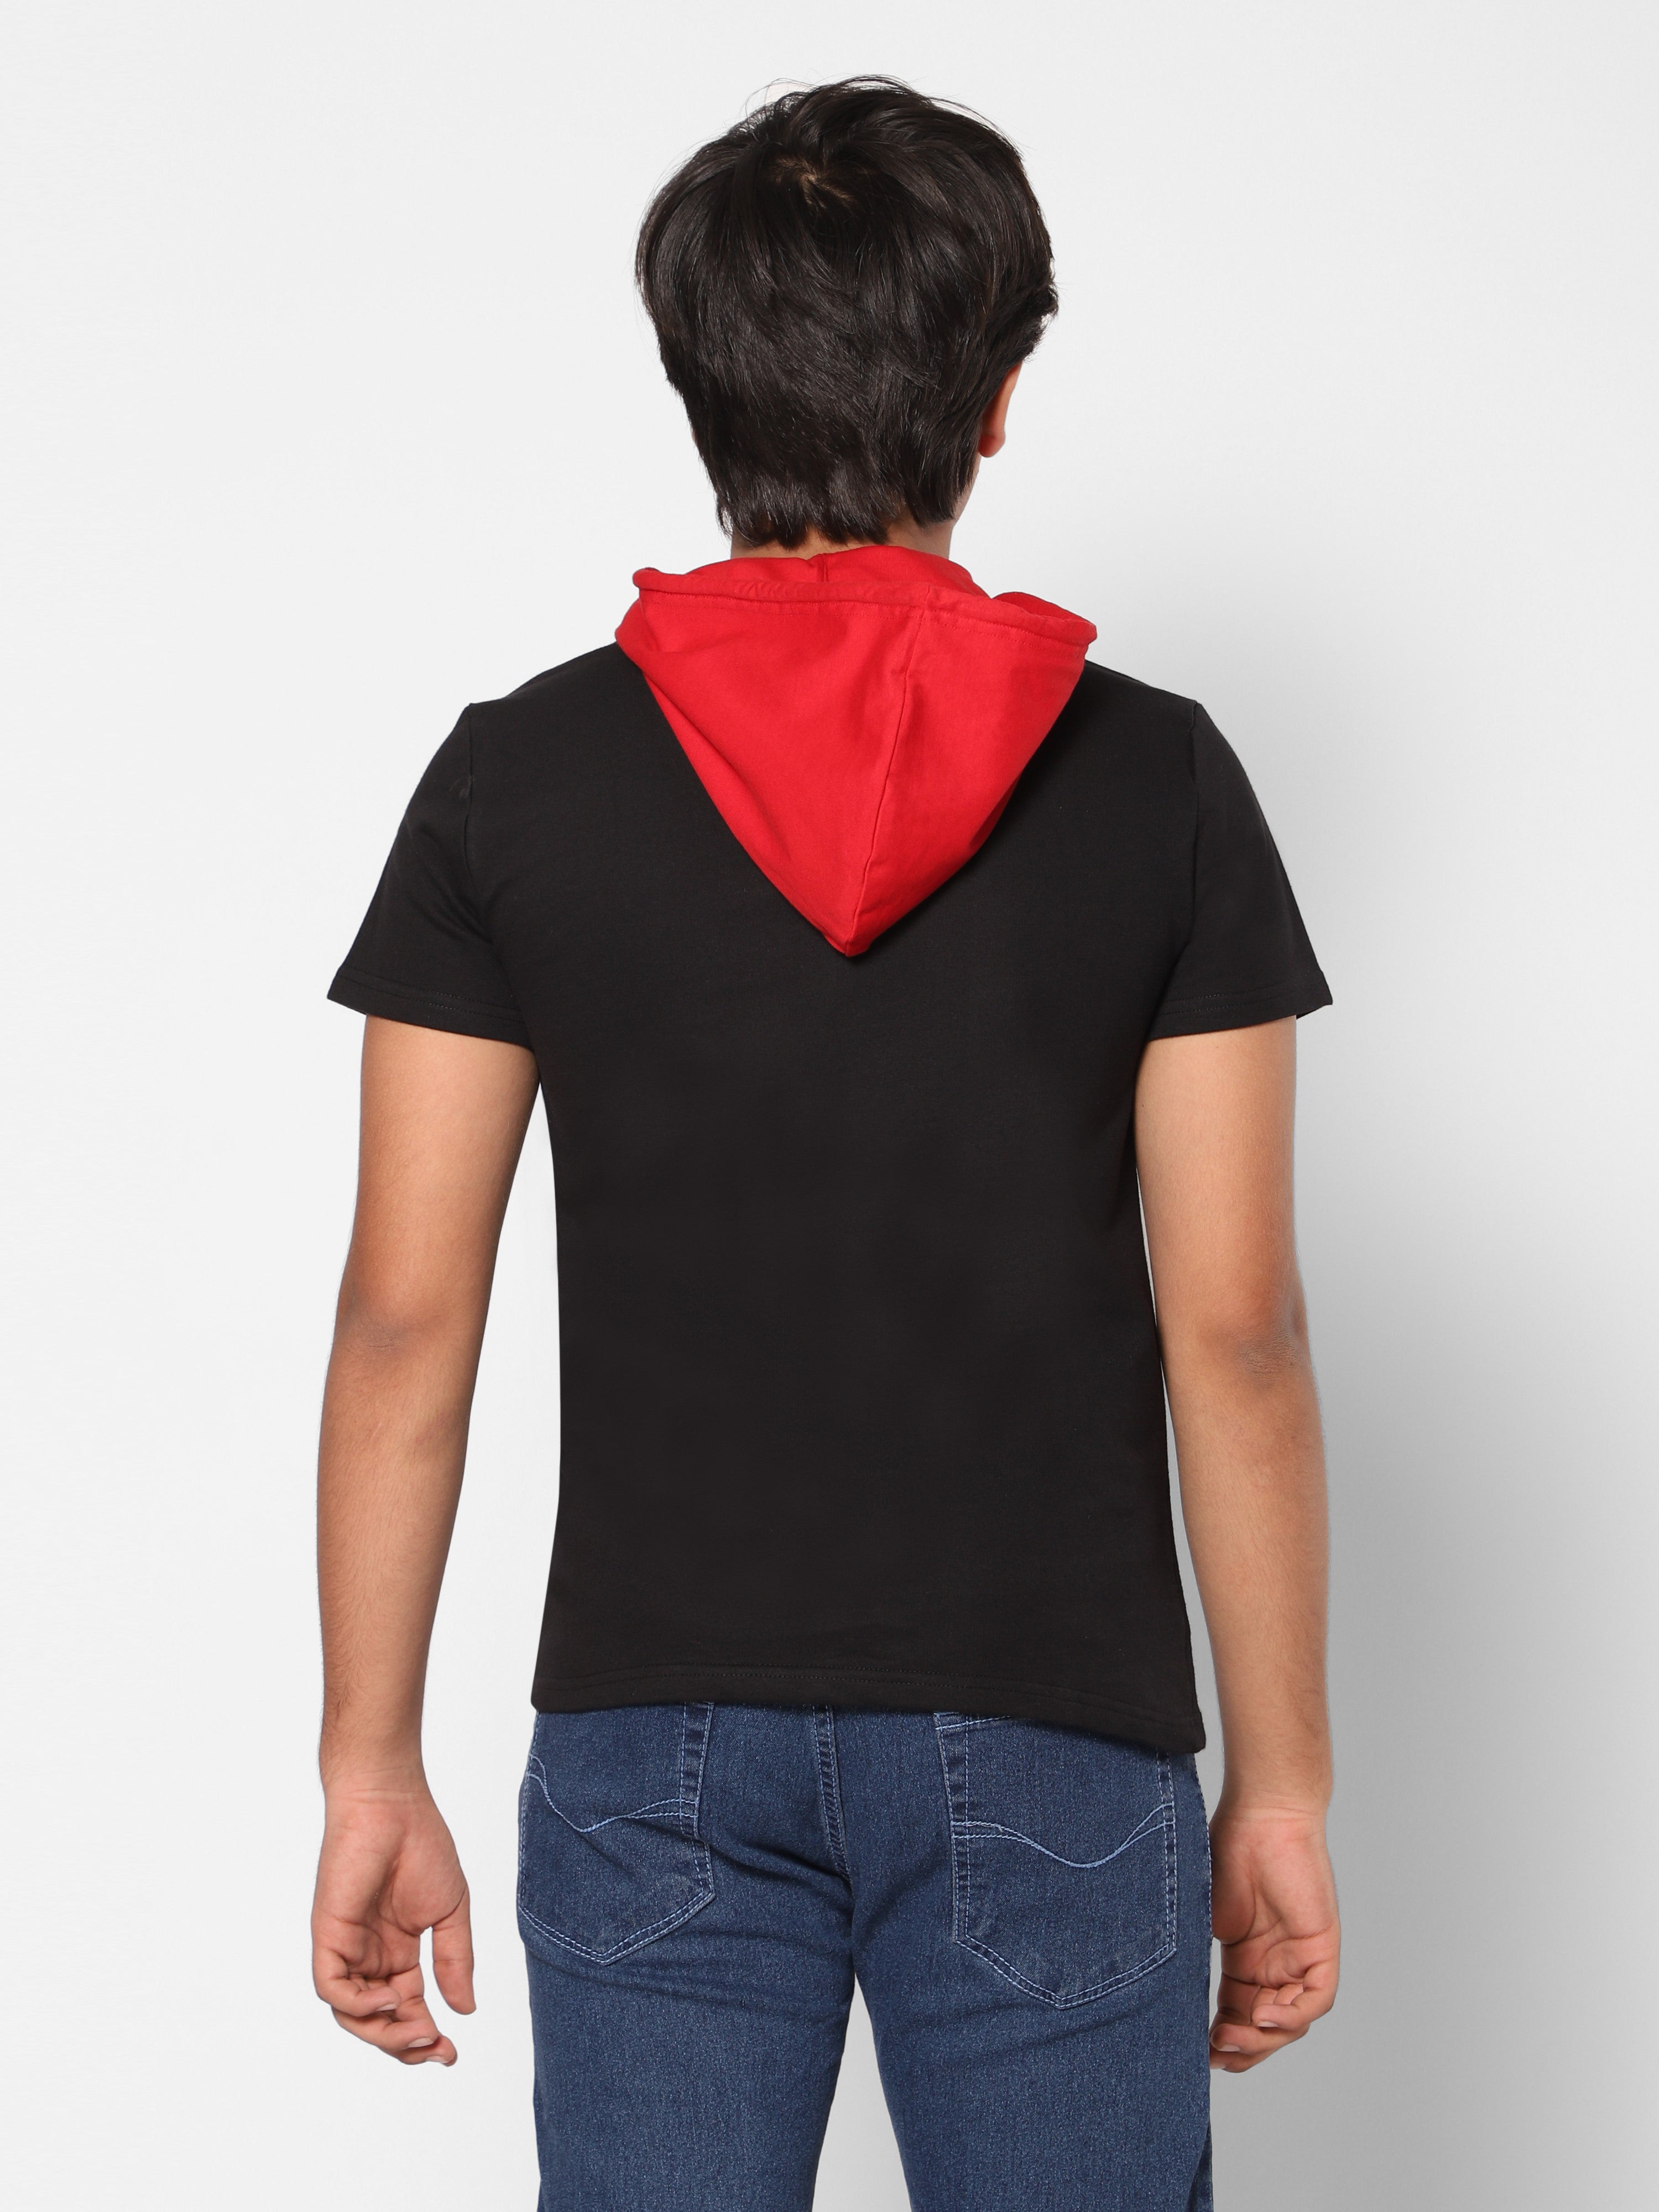 TeenTrums Regular Boys Fashion T-shirt with hoodie - Geometric art - Black & Red